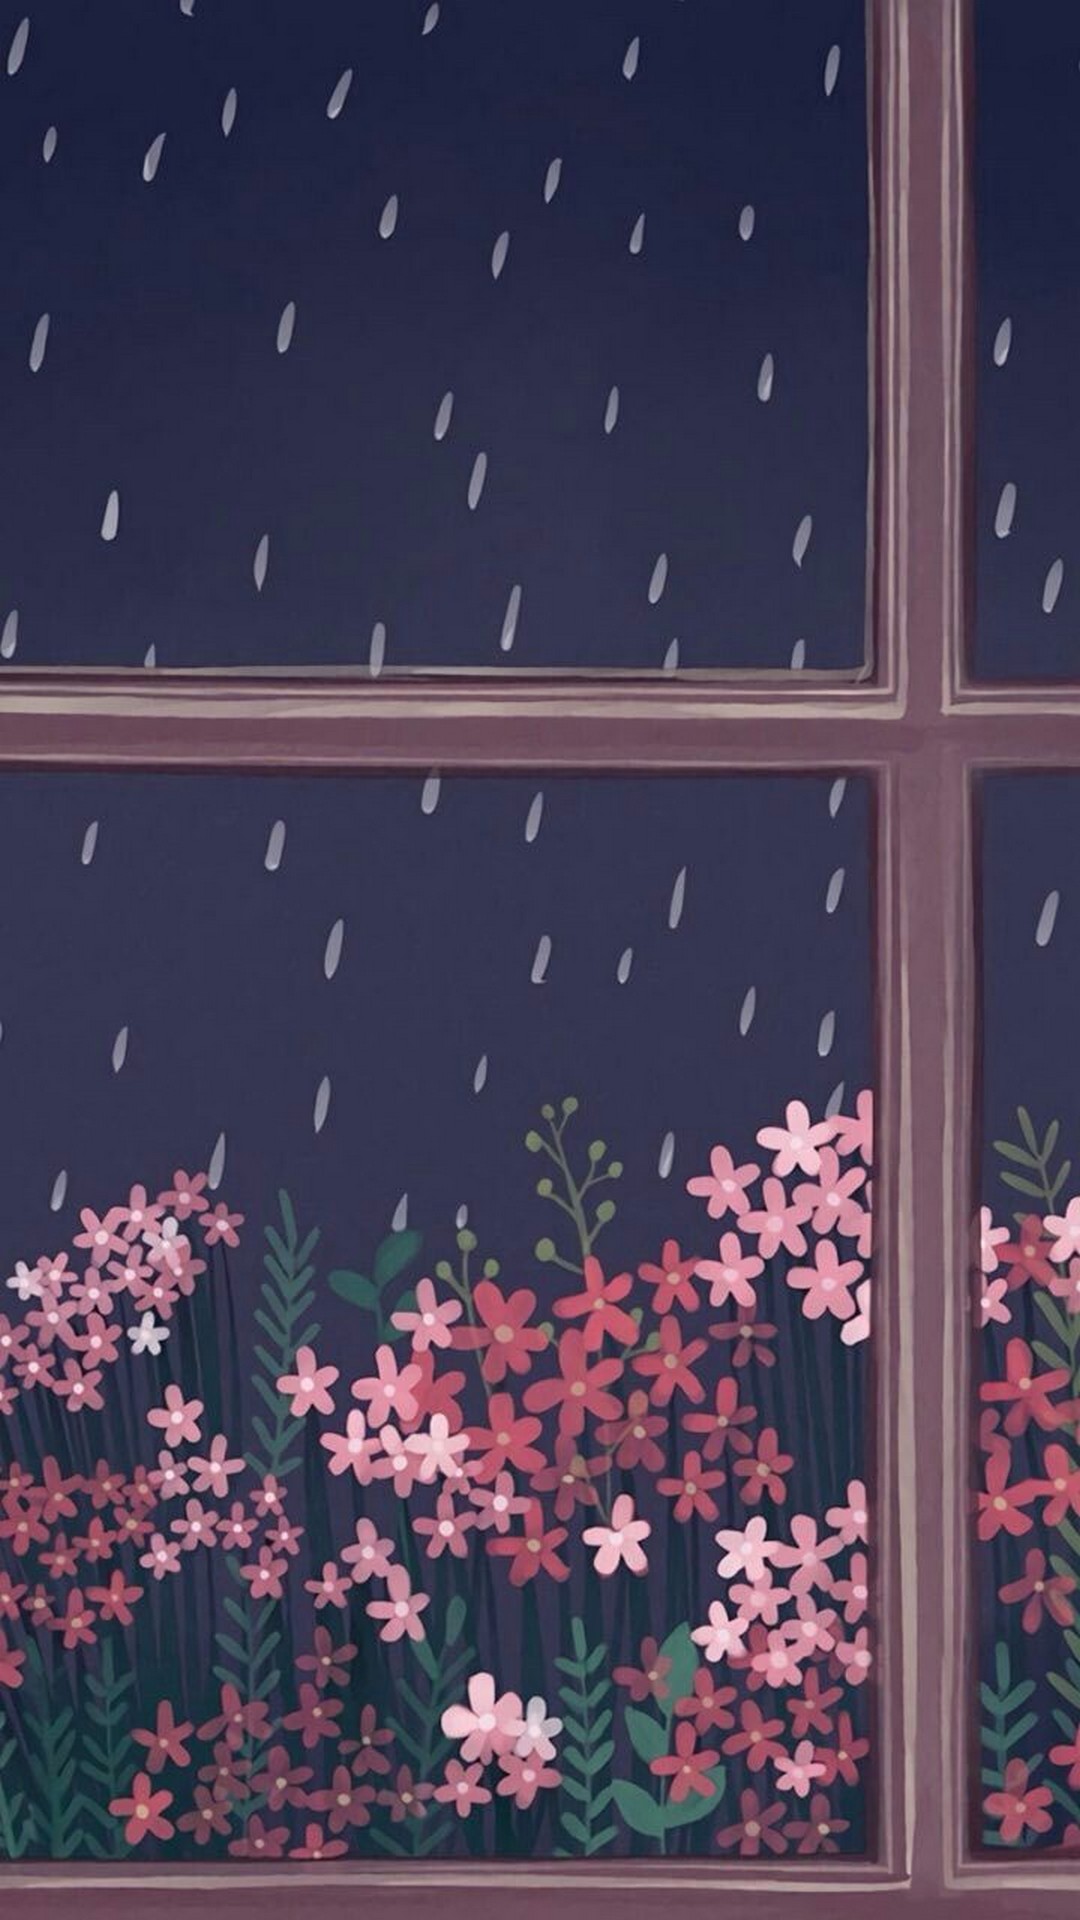 Rain Wallpaper For iPhone 6 resolution 1080x1920